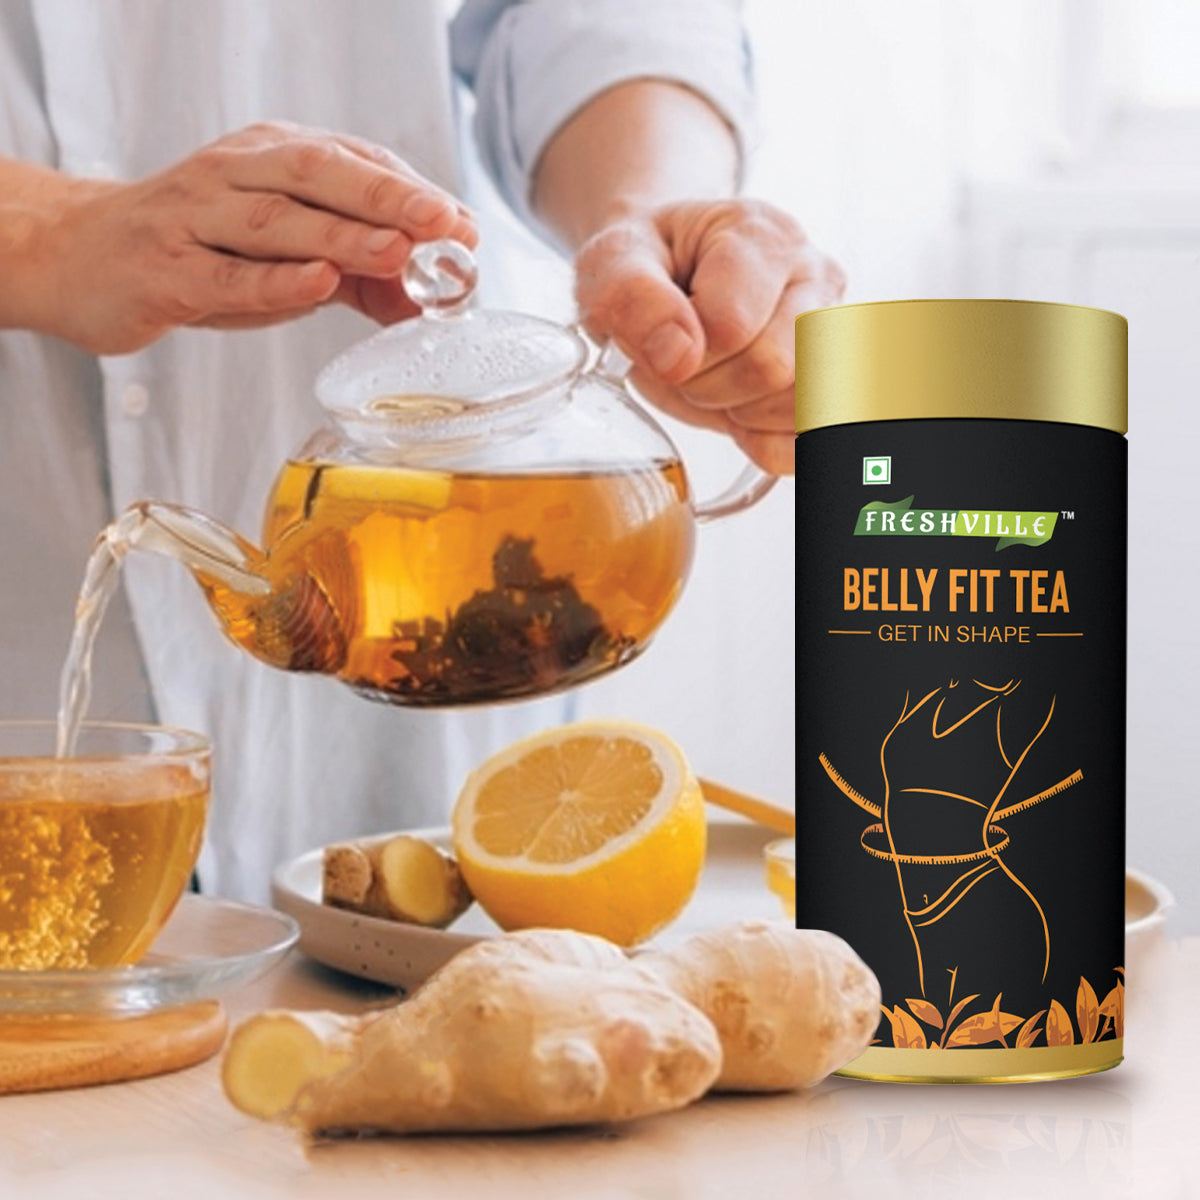 Freshville Belly Fit Tea